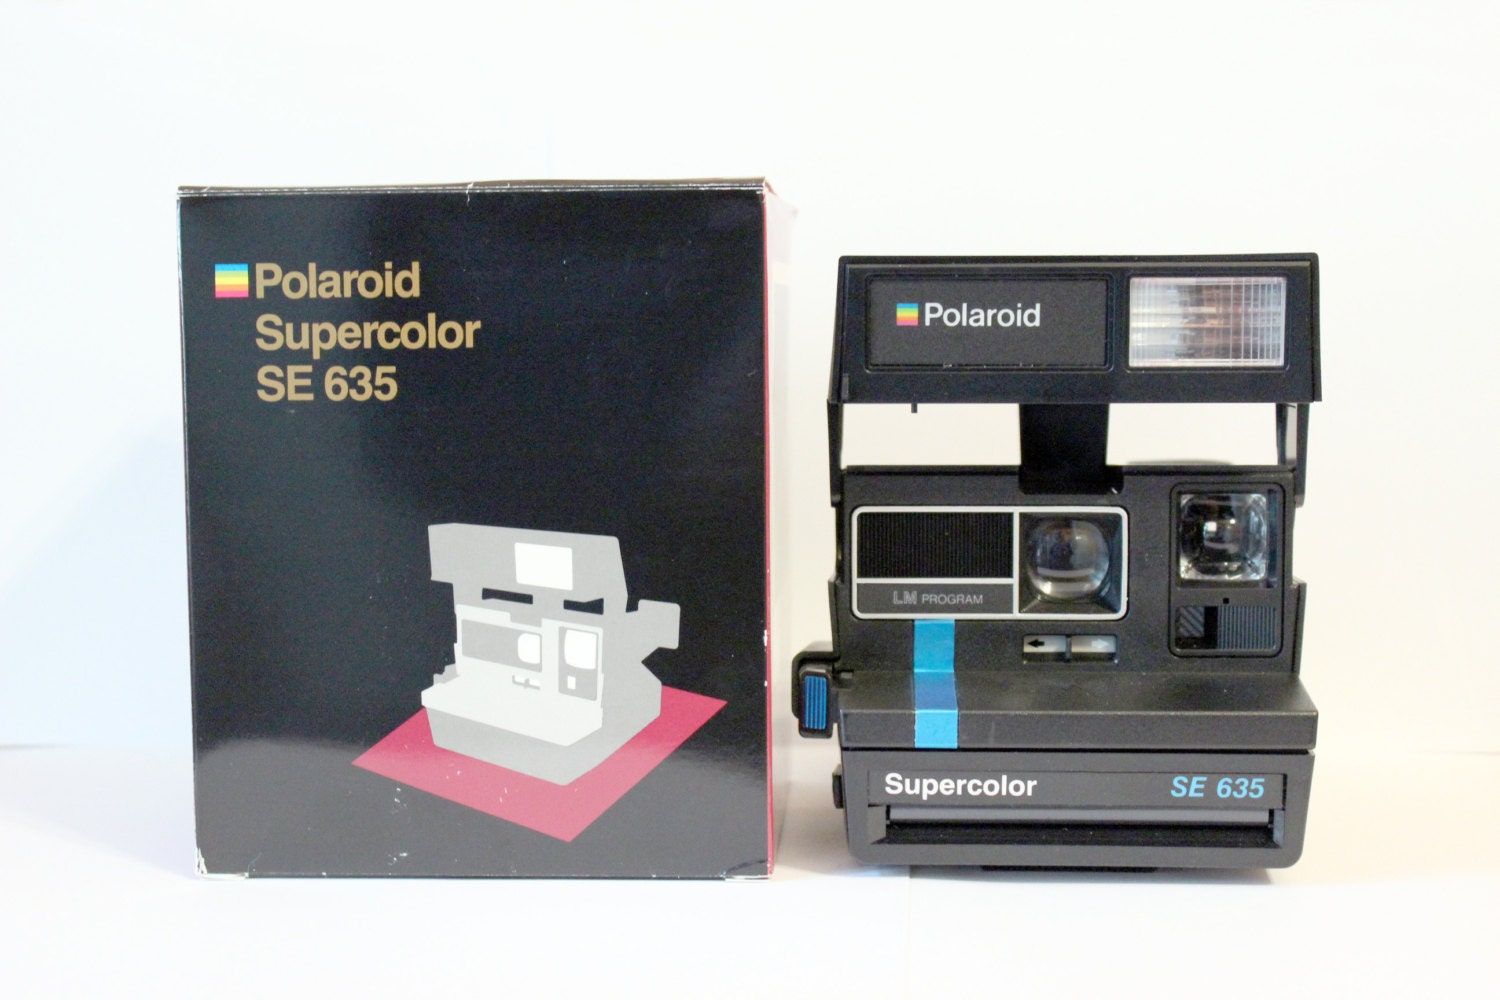 Polaroid Supercolor 635 not working : r/Polaroid